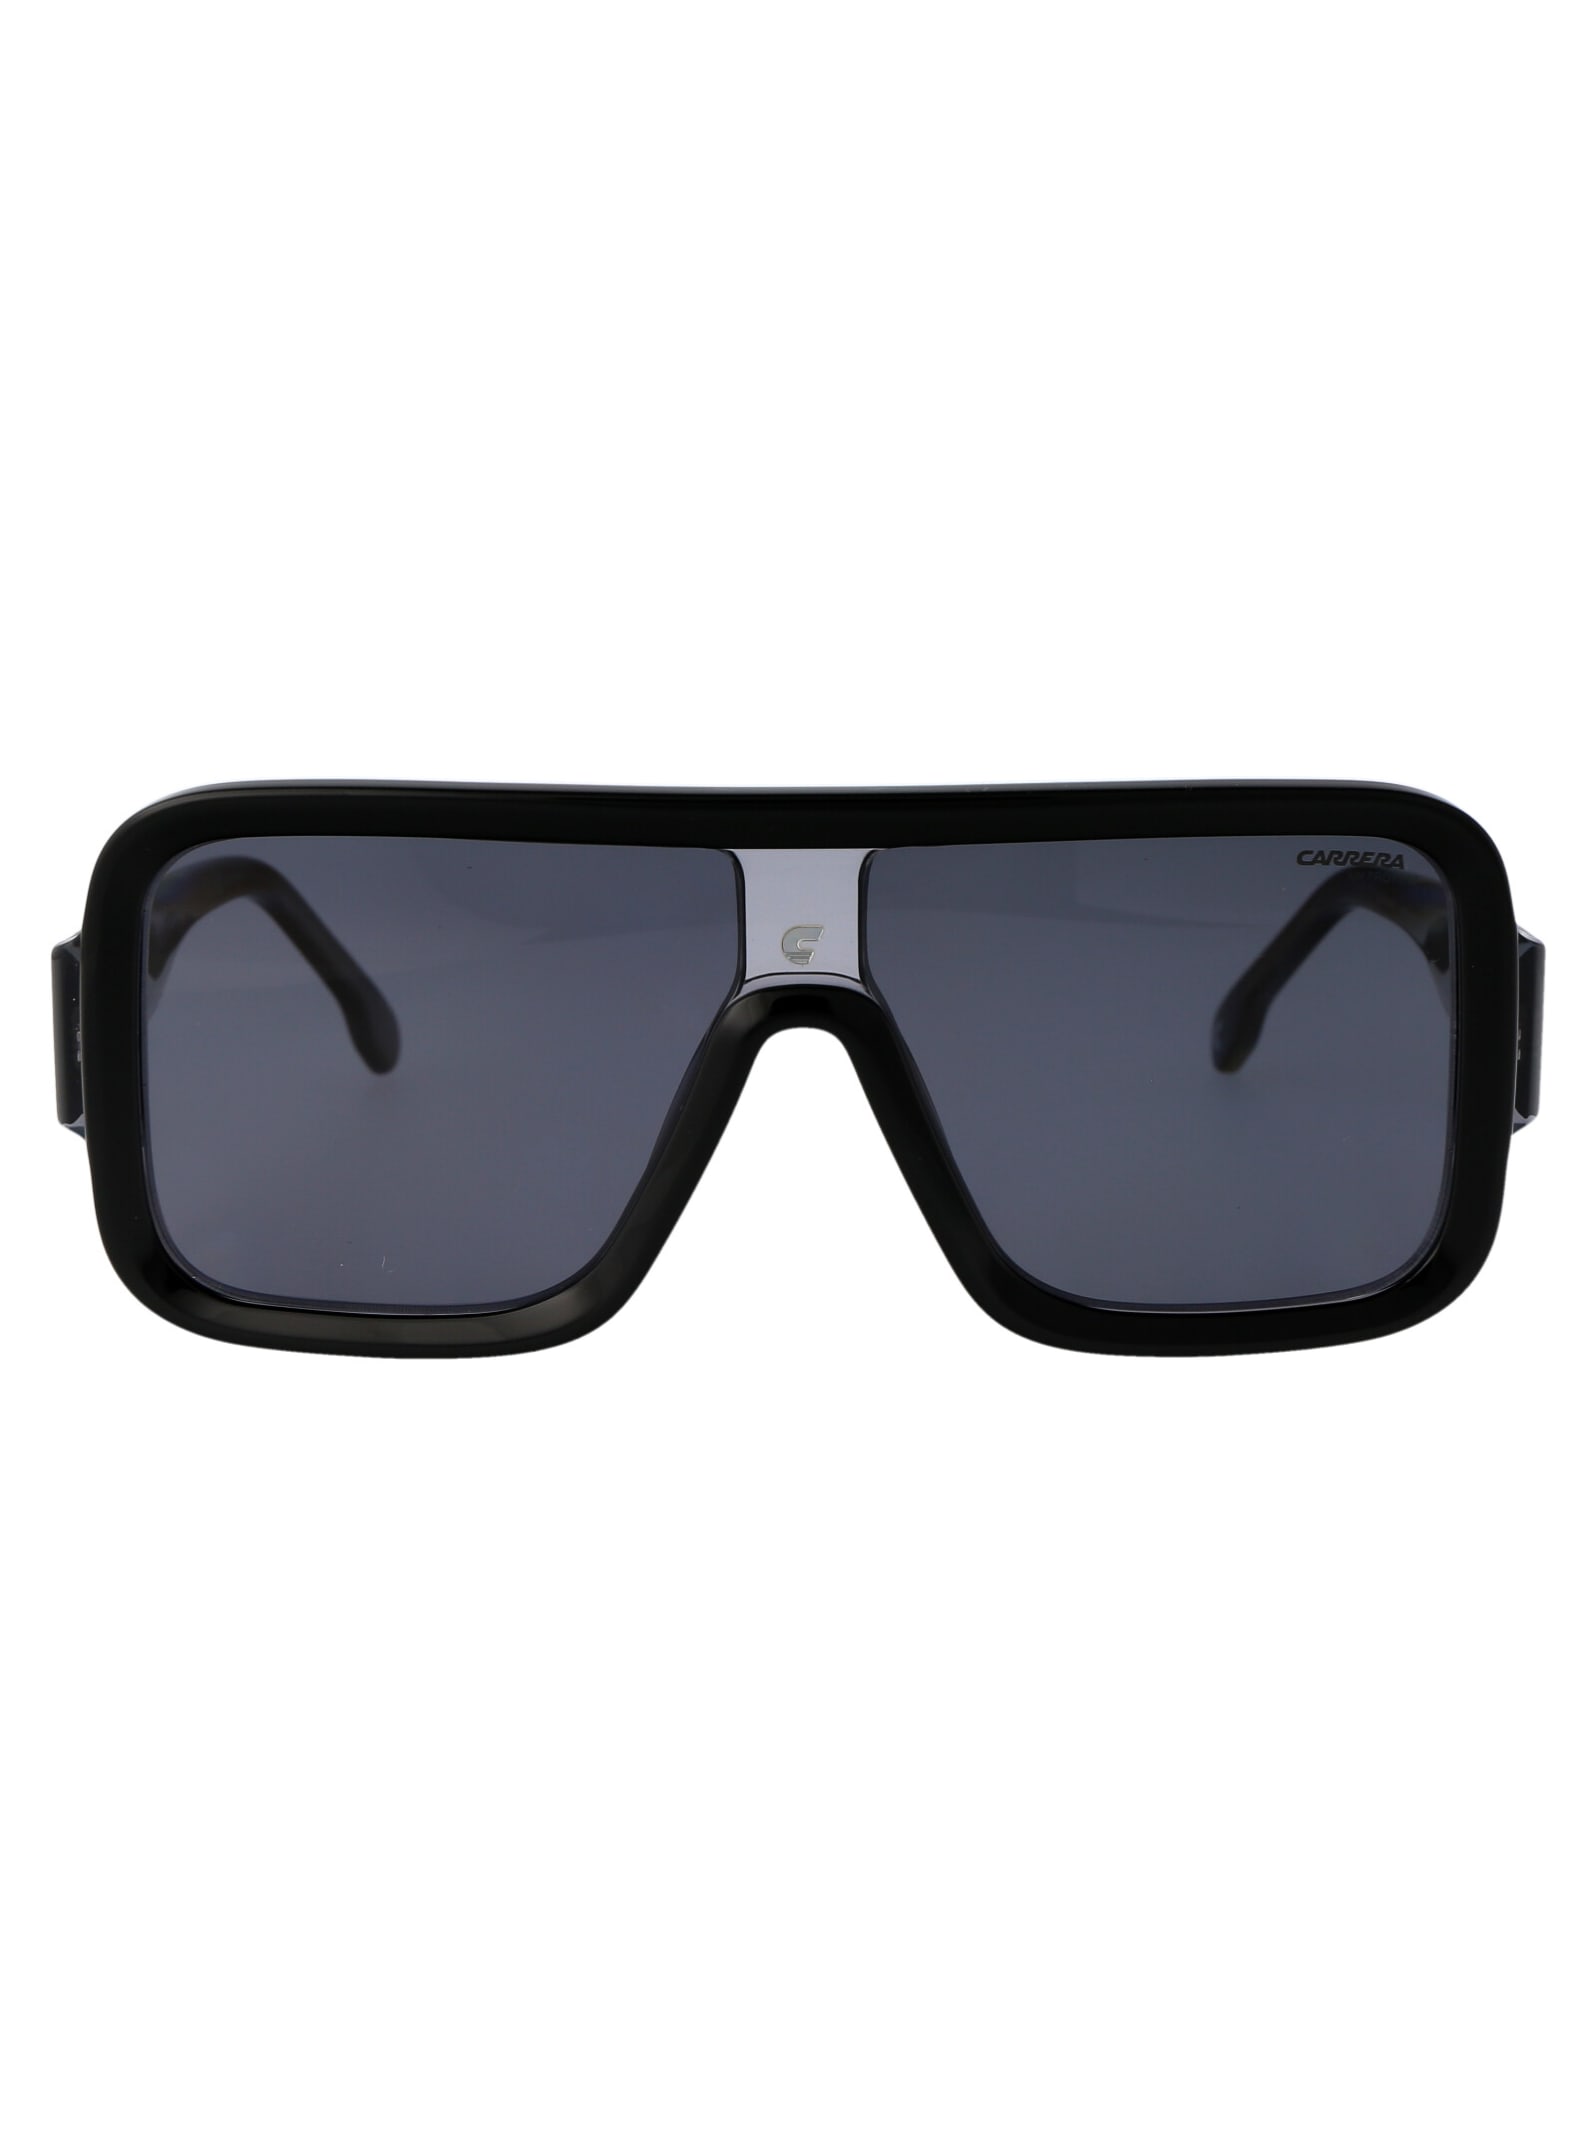 Carrera Flaglab 14 Sunglasses